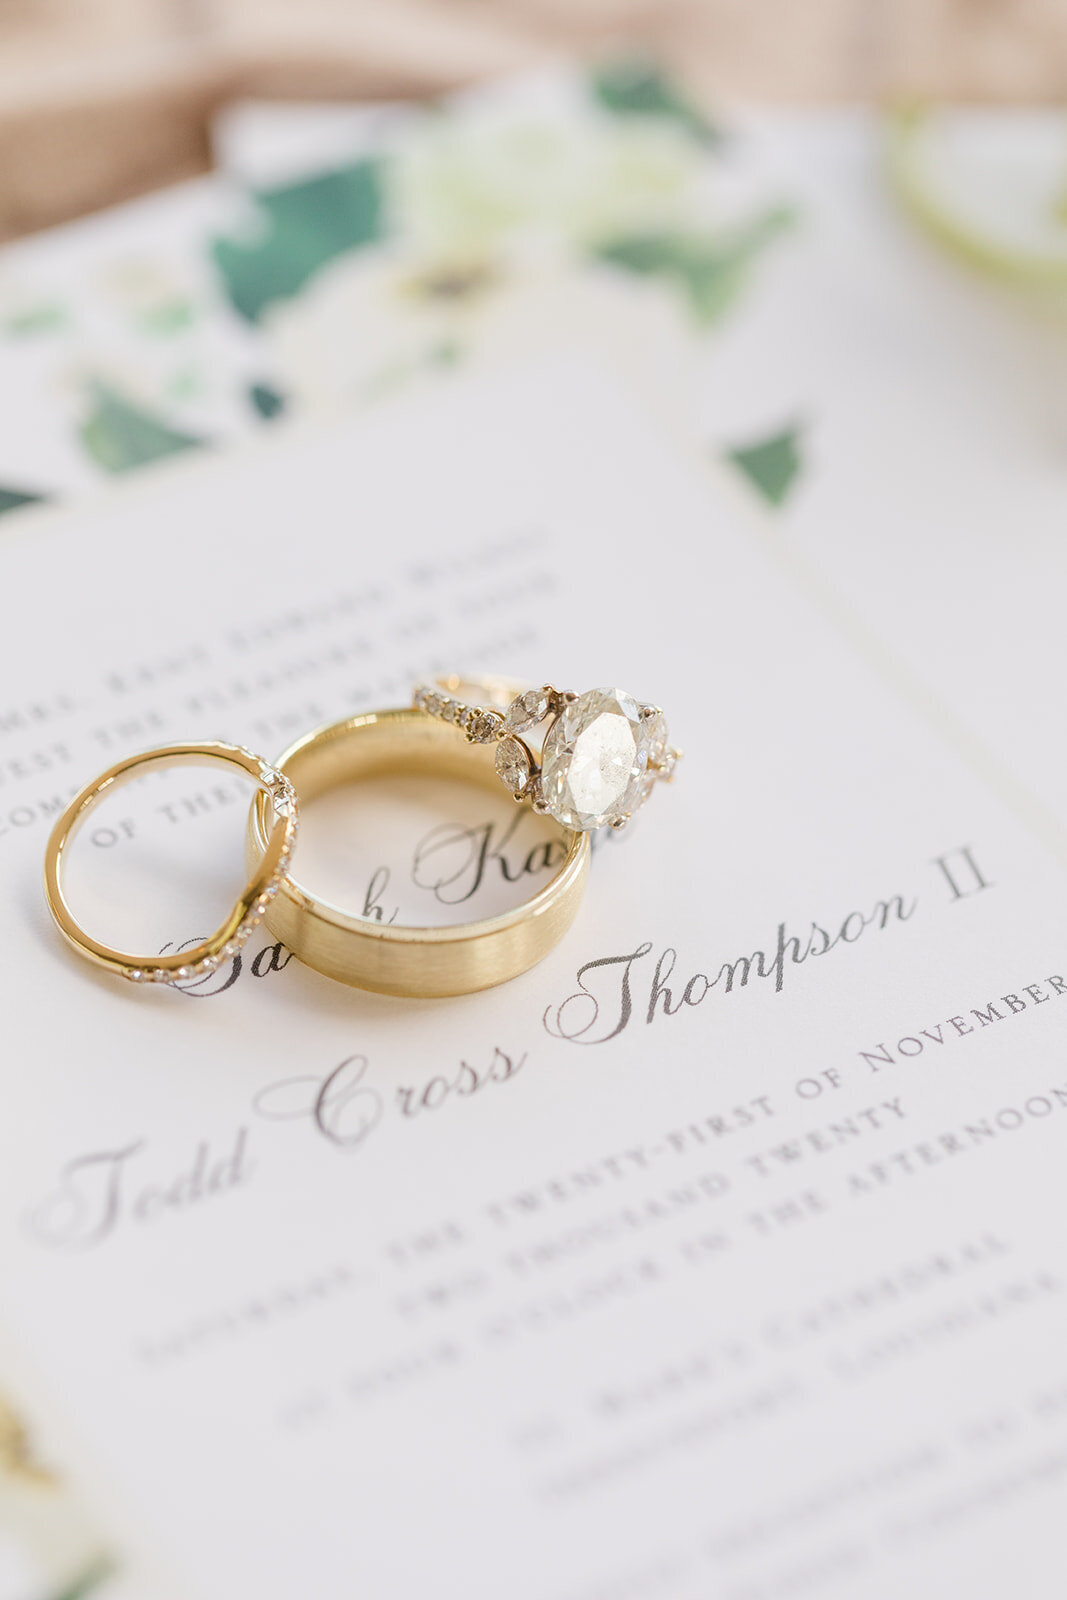 Wedding rings on invitation